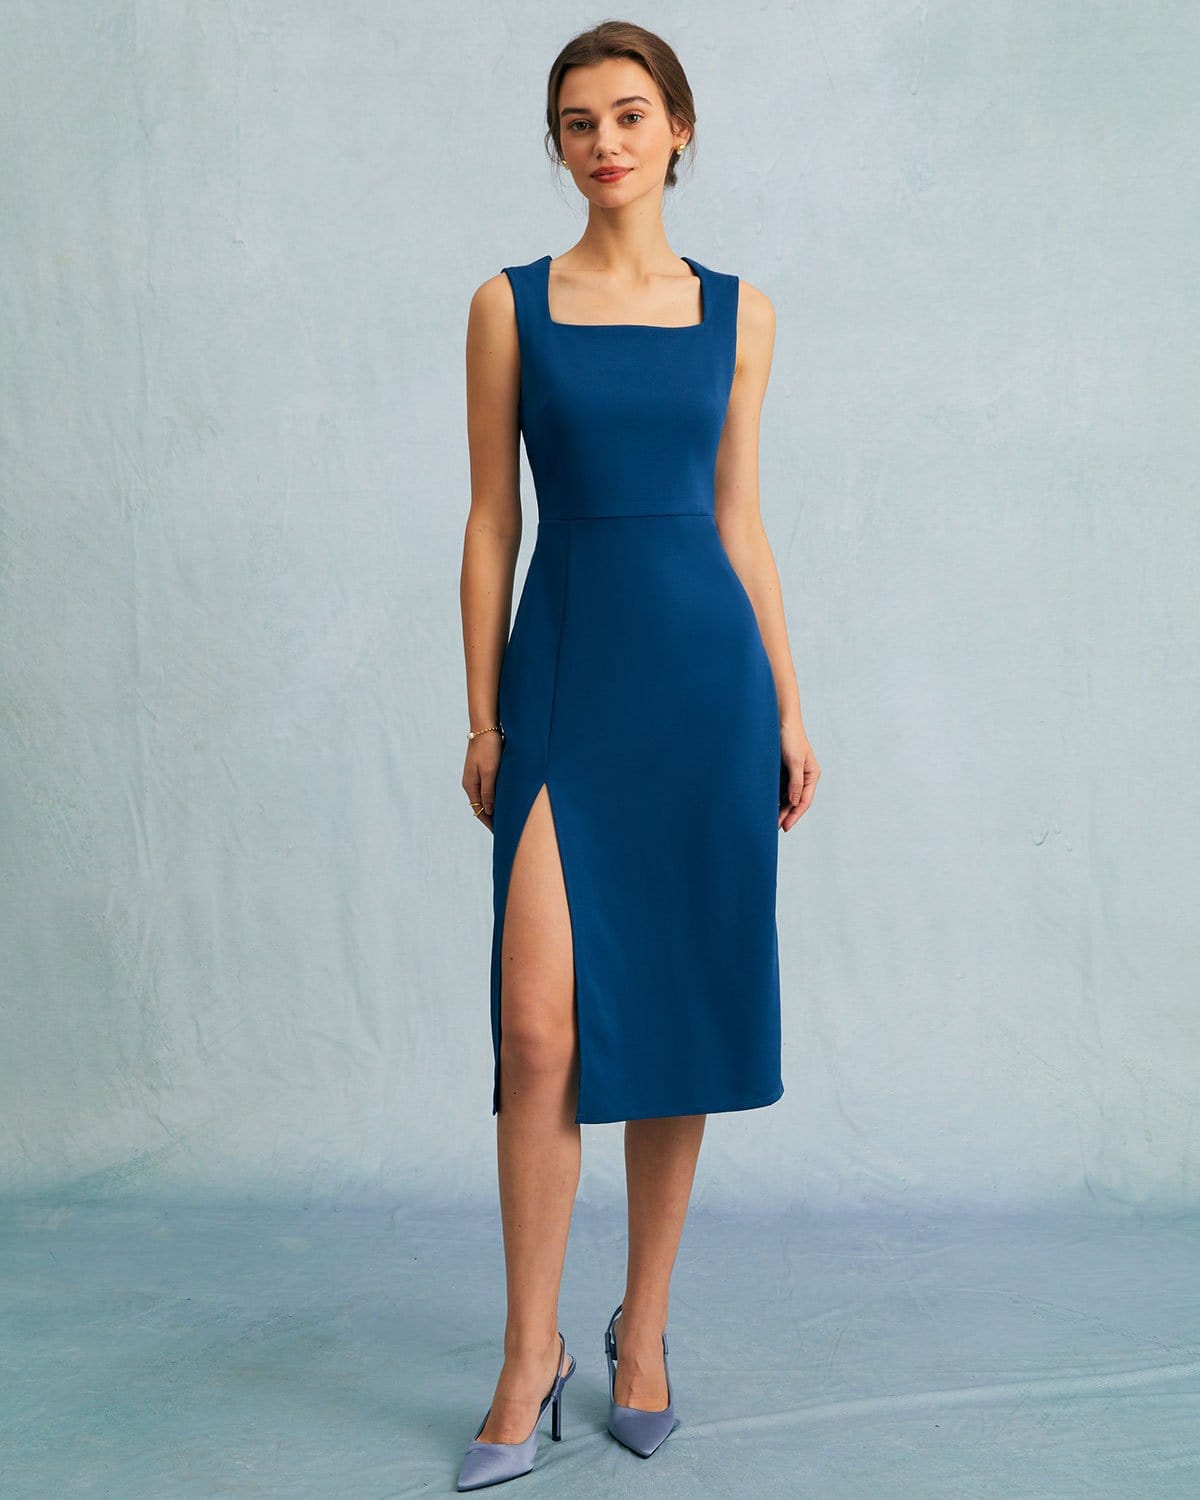 The Blue Square Neck Side Slit Sleeveless Midi Dress